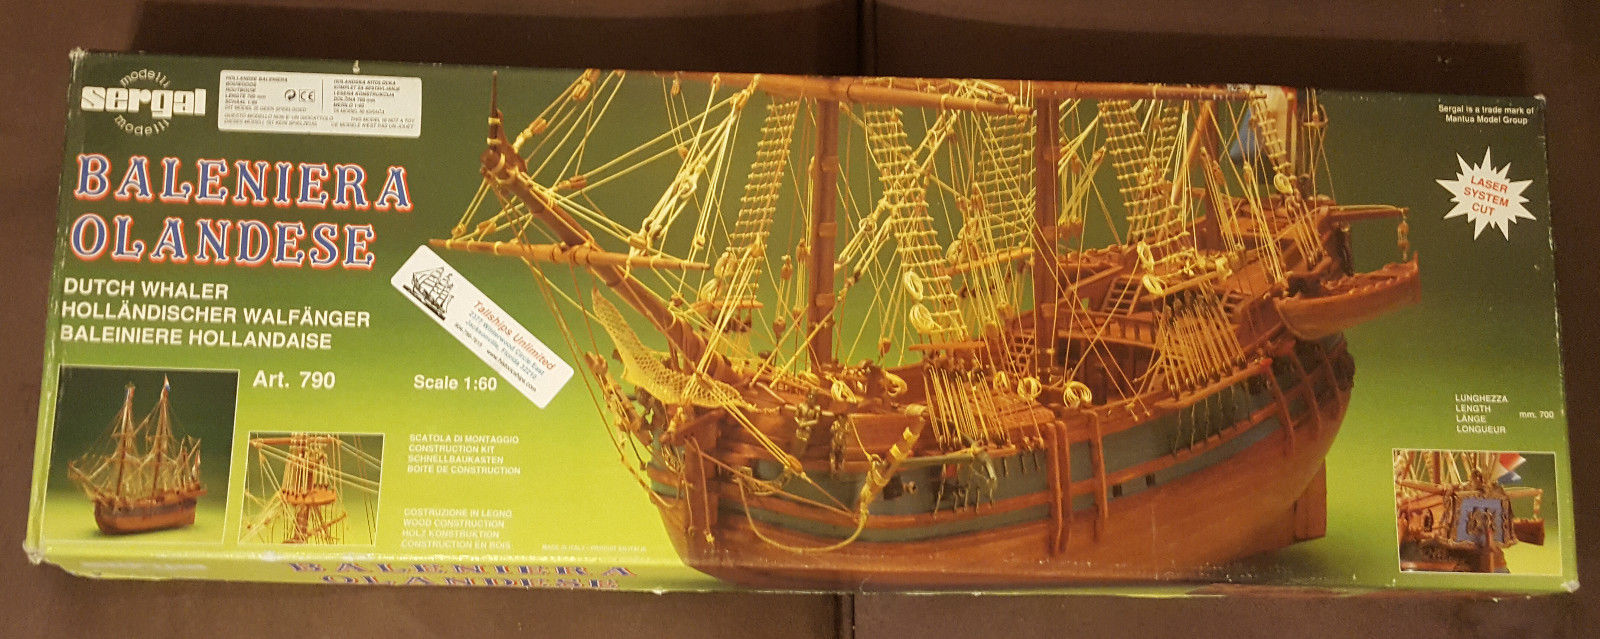 Dutch Whaler Baleniera Olandese, 1:60 Scale Wood/Brass Model Ship Kit, Mantua